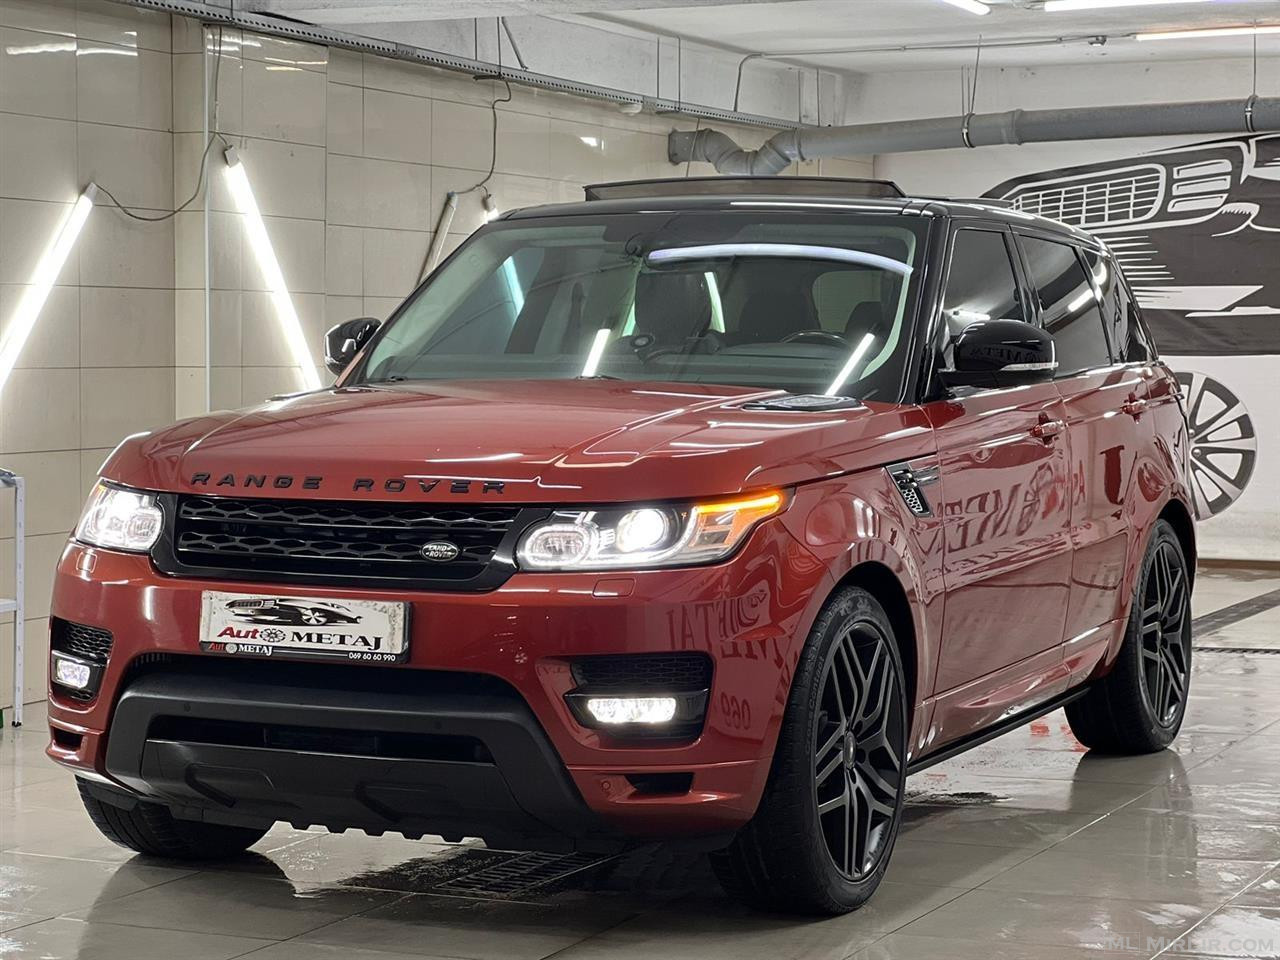 Range Rover Sports Viti Prodhimit Fundi 2014  4.4 Diesel  